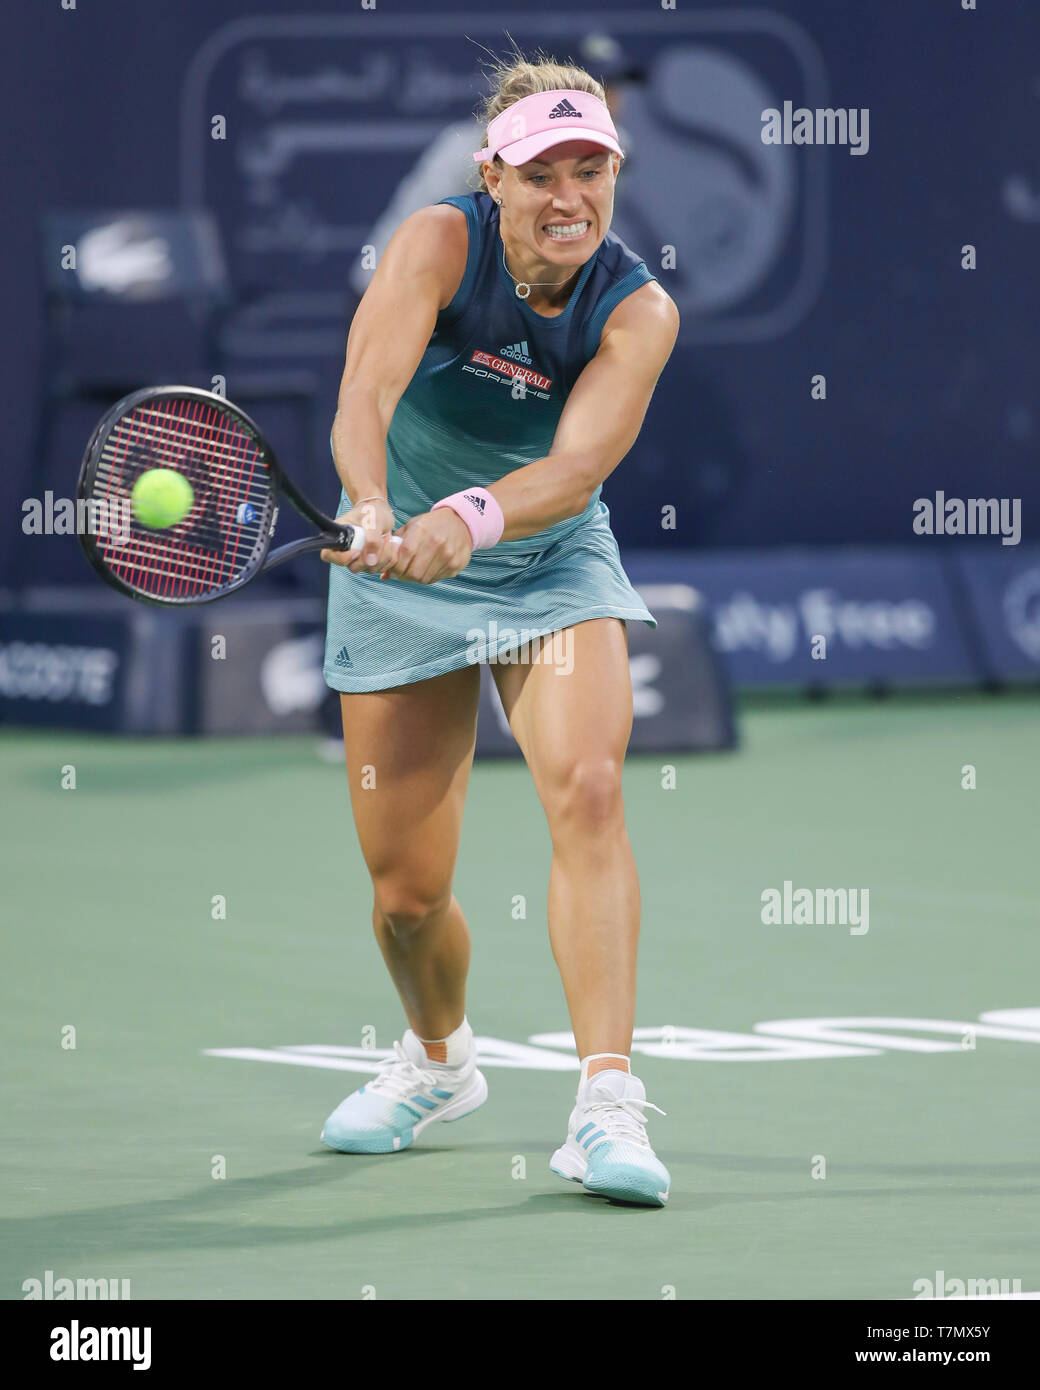 German tennis player Angelique Kerber playing backhand shot during Dubai Tennis  Championships 2019, Dubai, United Arab Emirates Stock Photo - Alamy